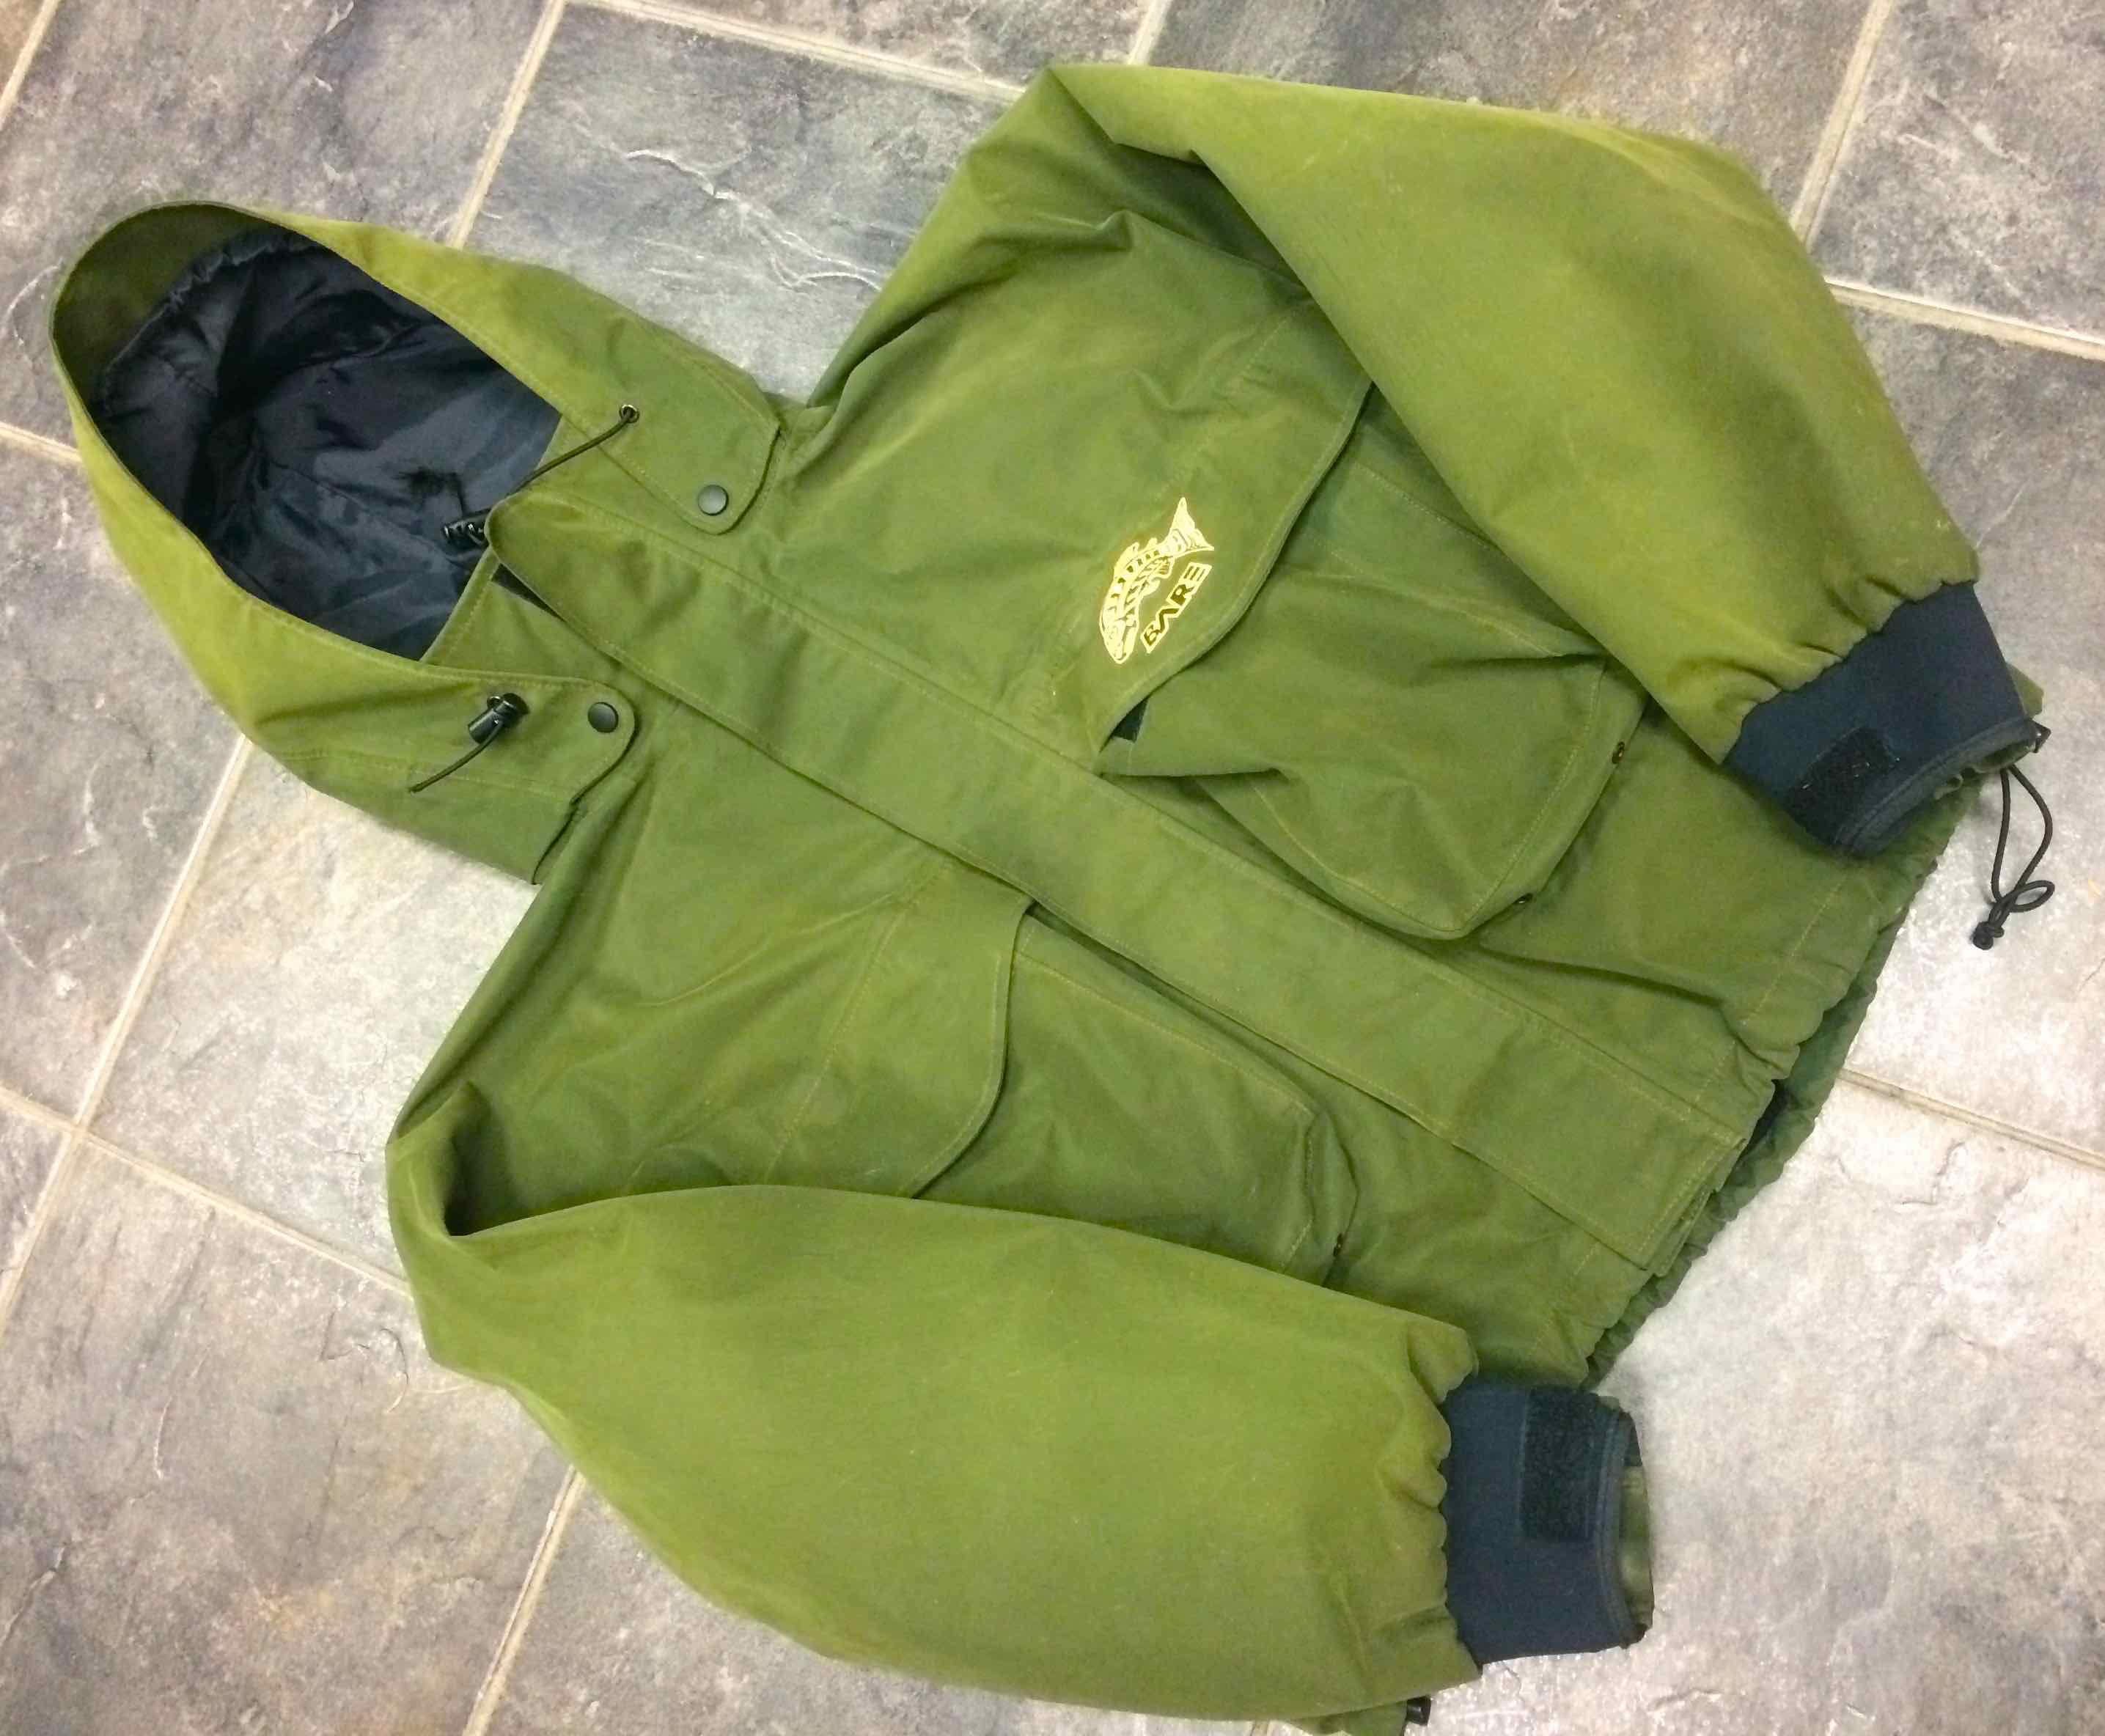 SOLD – Bare Kodiak Waterproof Breathable Jacket – Size Medium